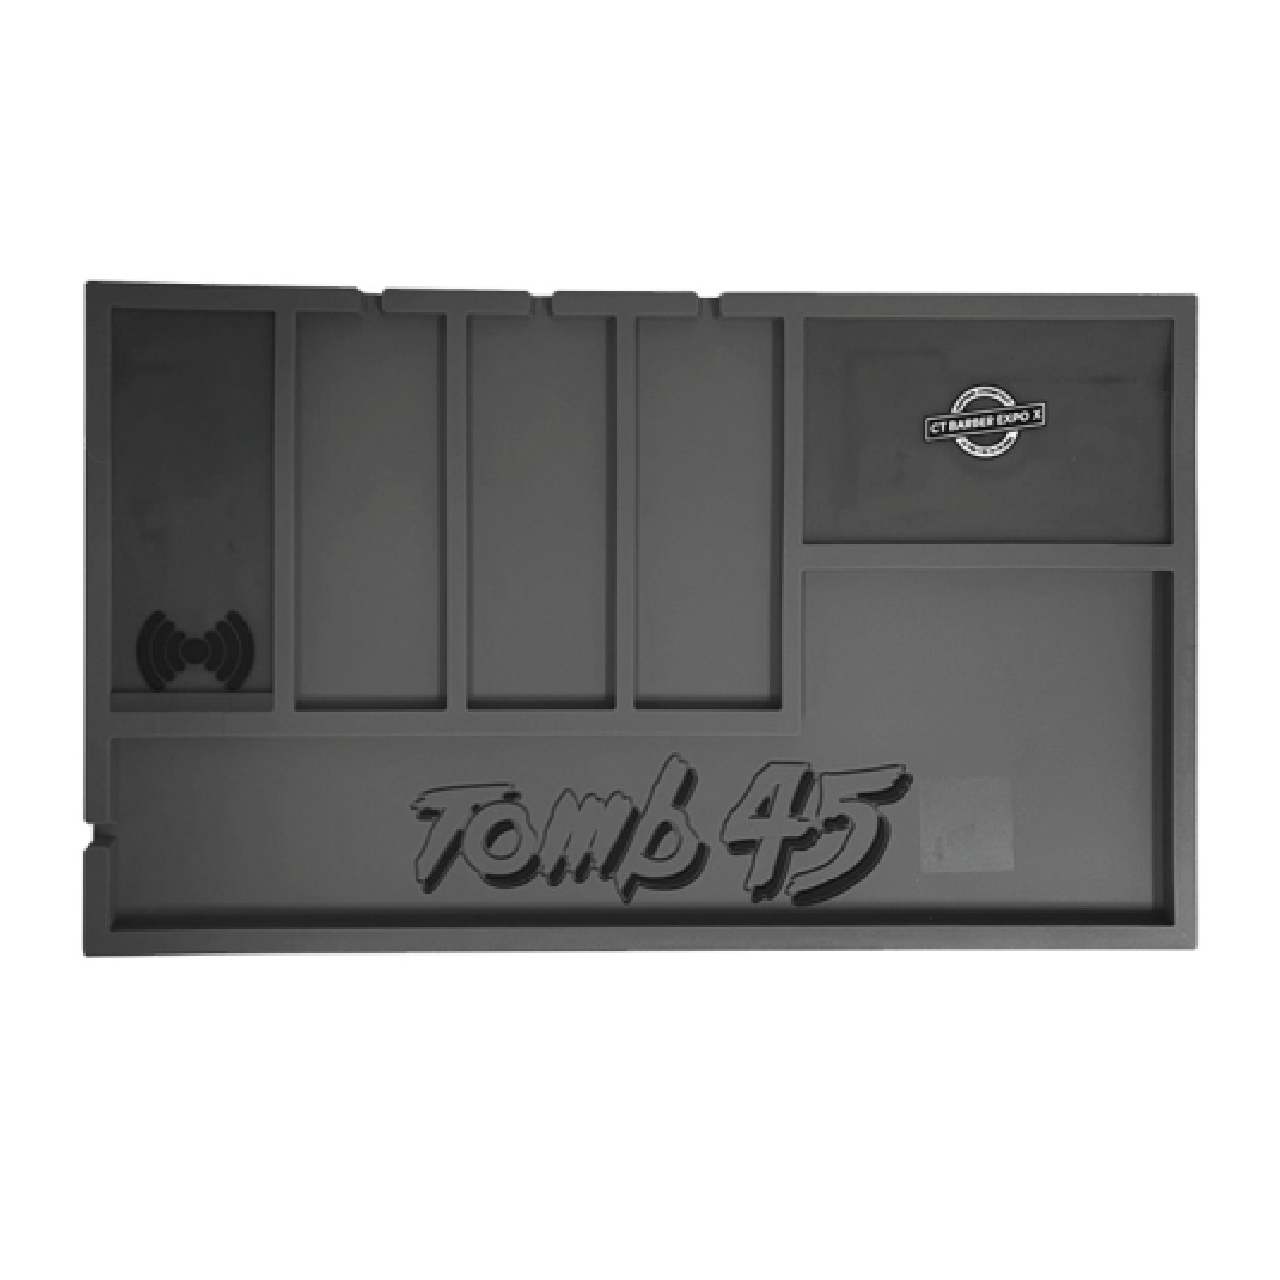 Tomb45 Powered Mat Black - čierna magnetická/nabíjacia podložka